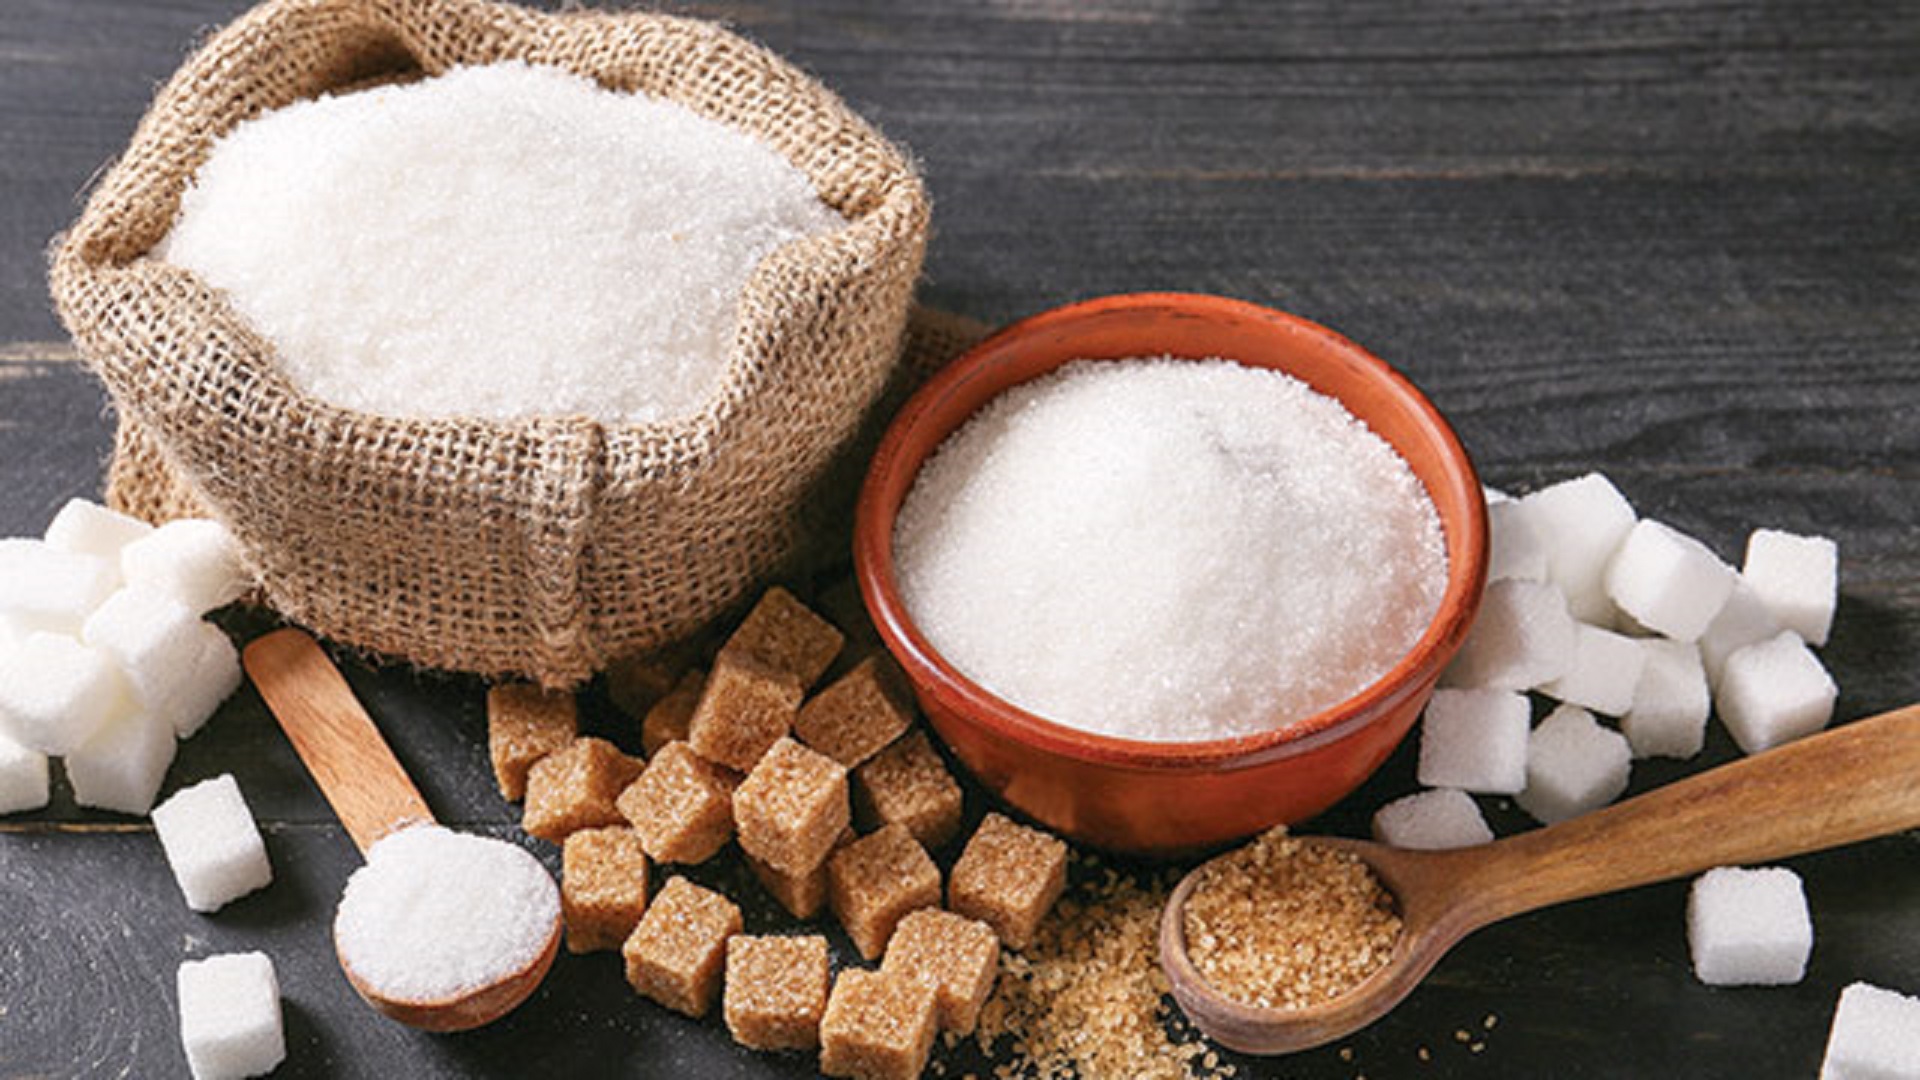 Bahaya Kekurangan Gula, Mitos atau Fakta?